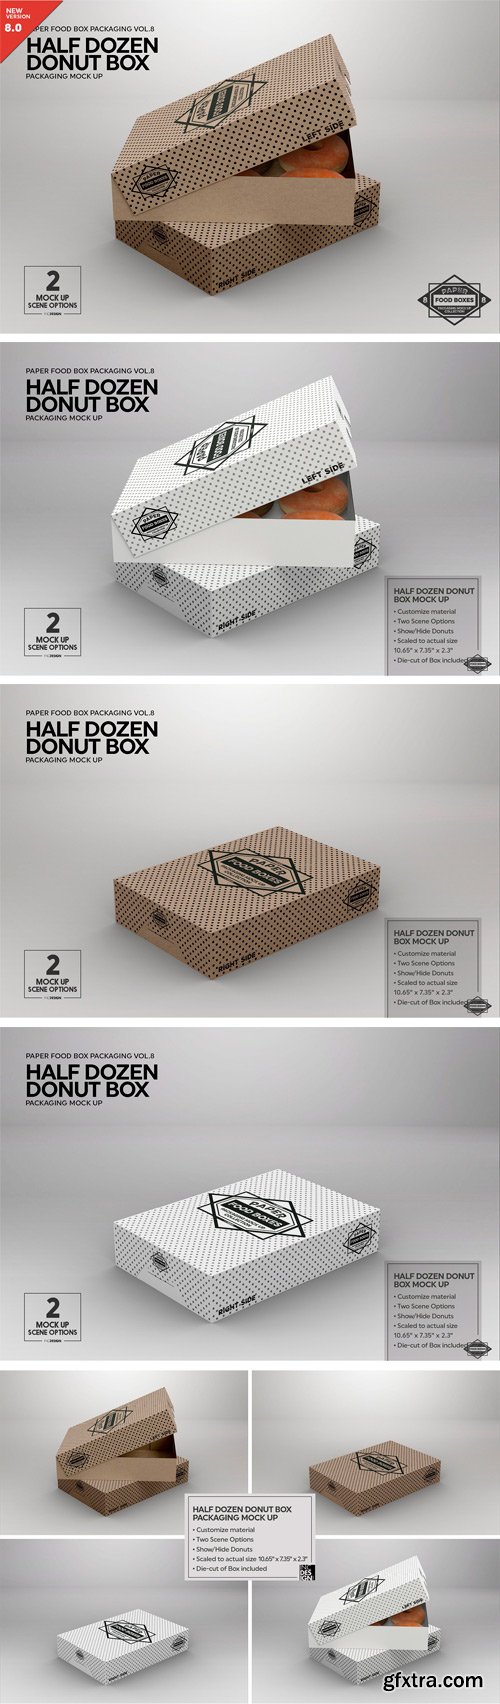 CM - Half Dozen Donut Box Mock Up 2181807